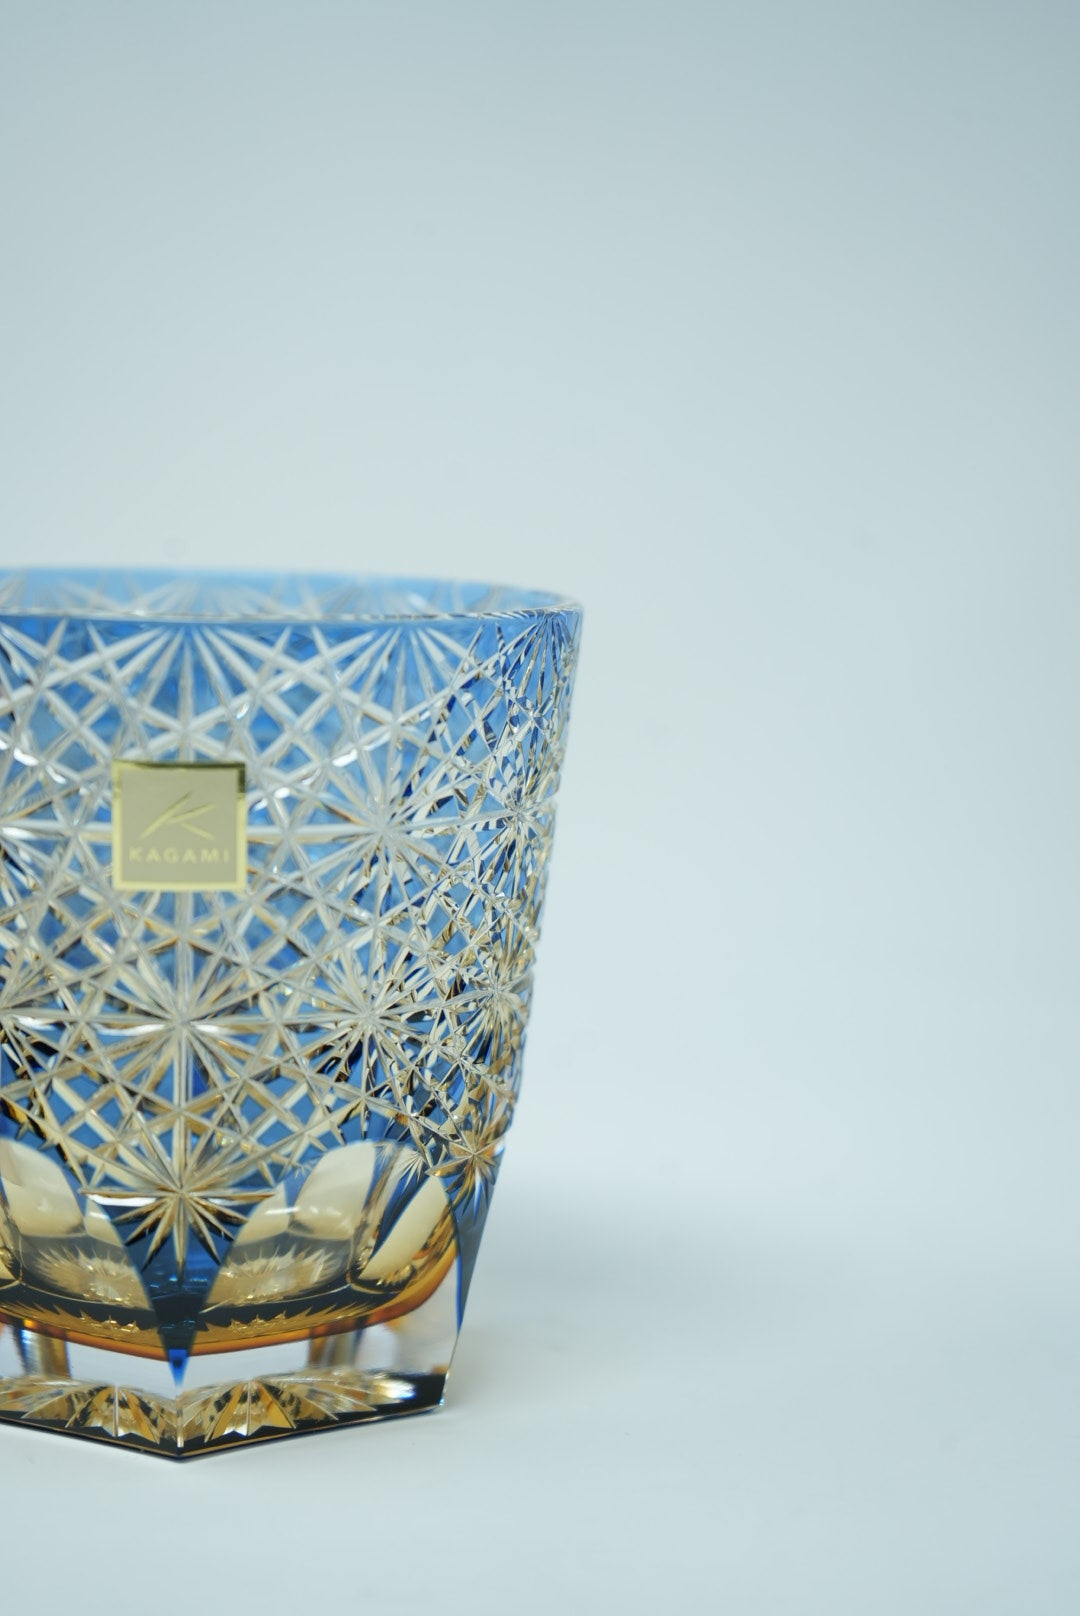 Kagami Crystal - Whisky Glass, Edo Kiriko Kasaneirome &quot;Ogiku (chrysanthemum in abundance)&quot; by Junichi Nabetani